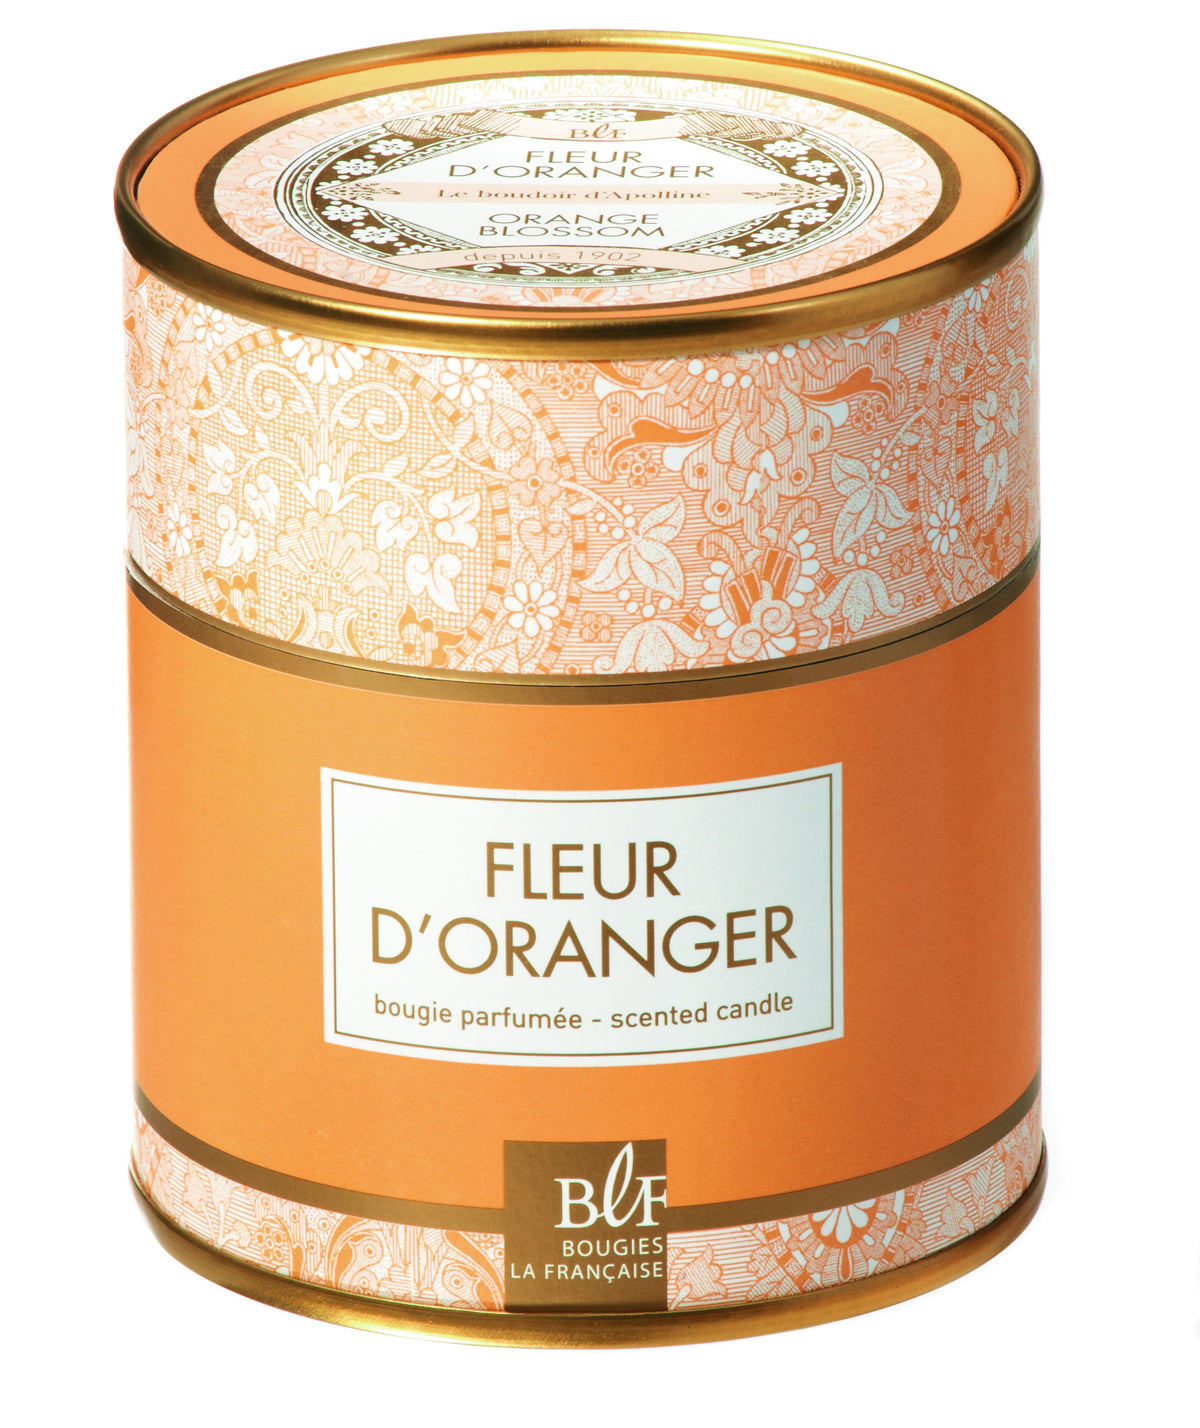 Bougies la Francaise Boudoir Orange Blossom Scented Candle